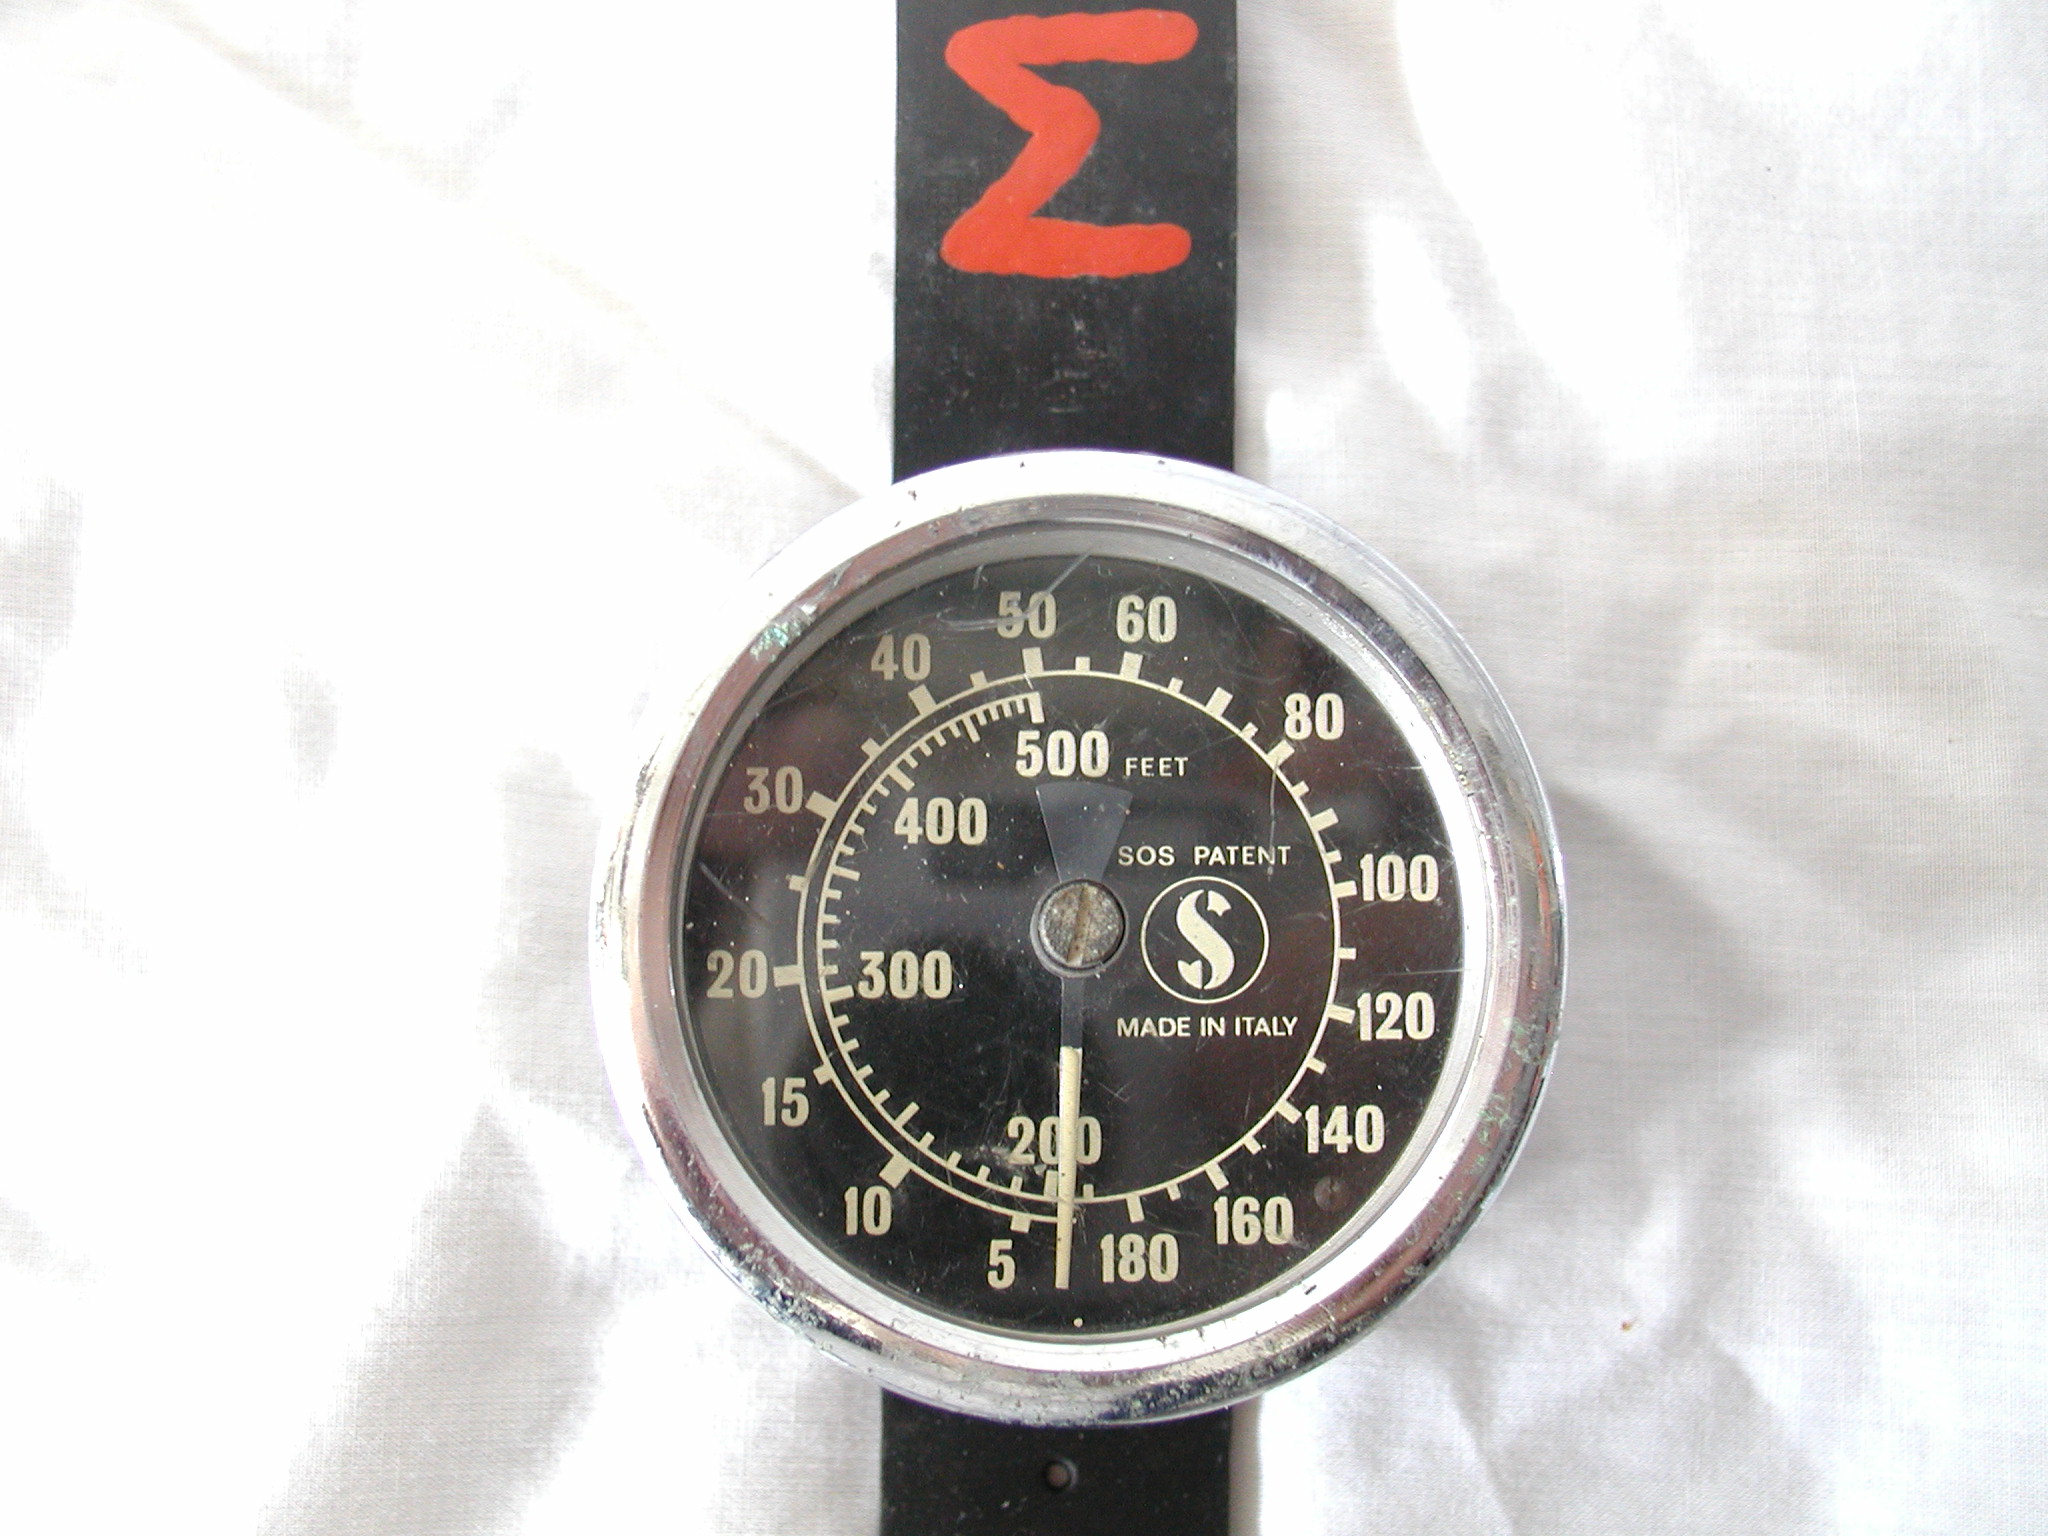 Scubapro depth gauge